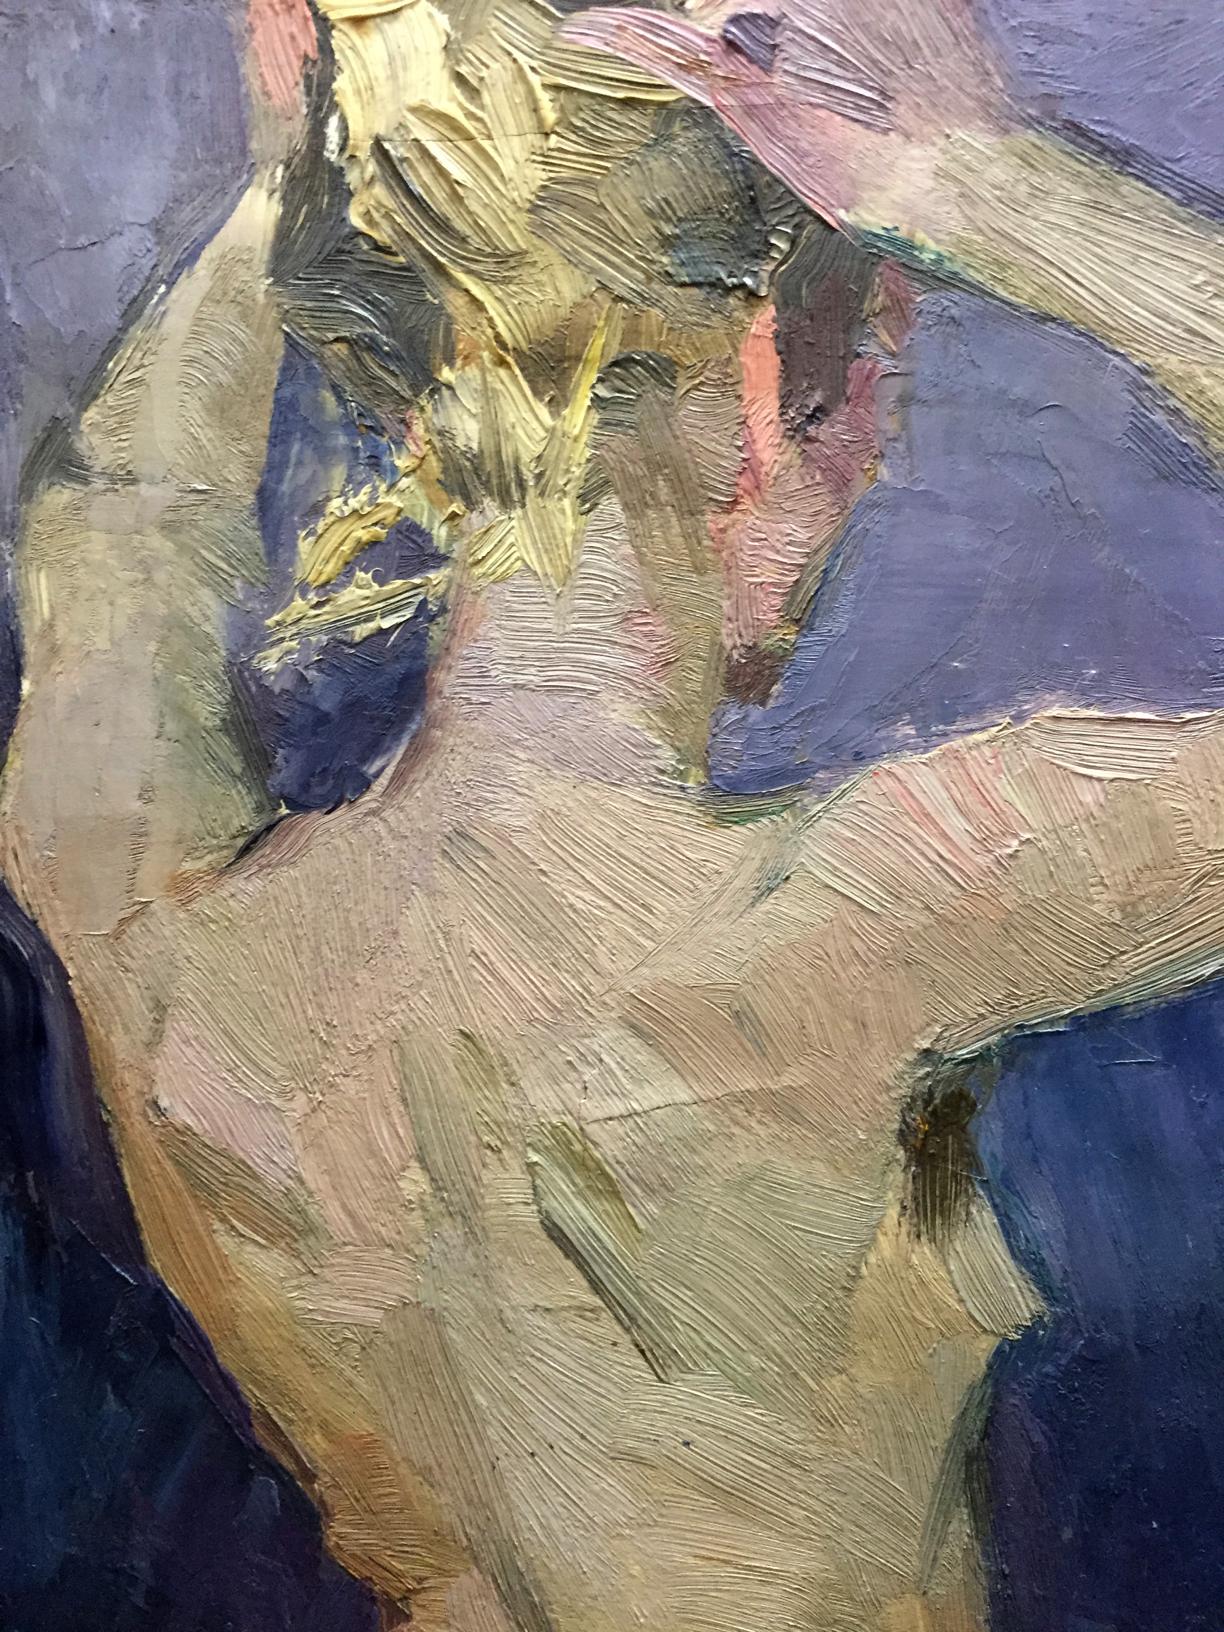 Oil painting Nude Krichevsky Gregory